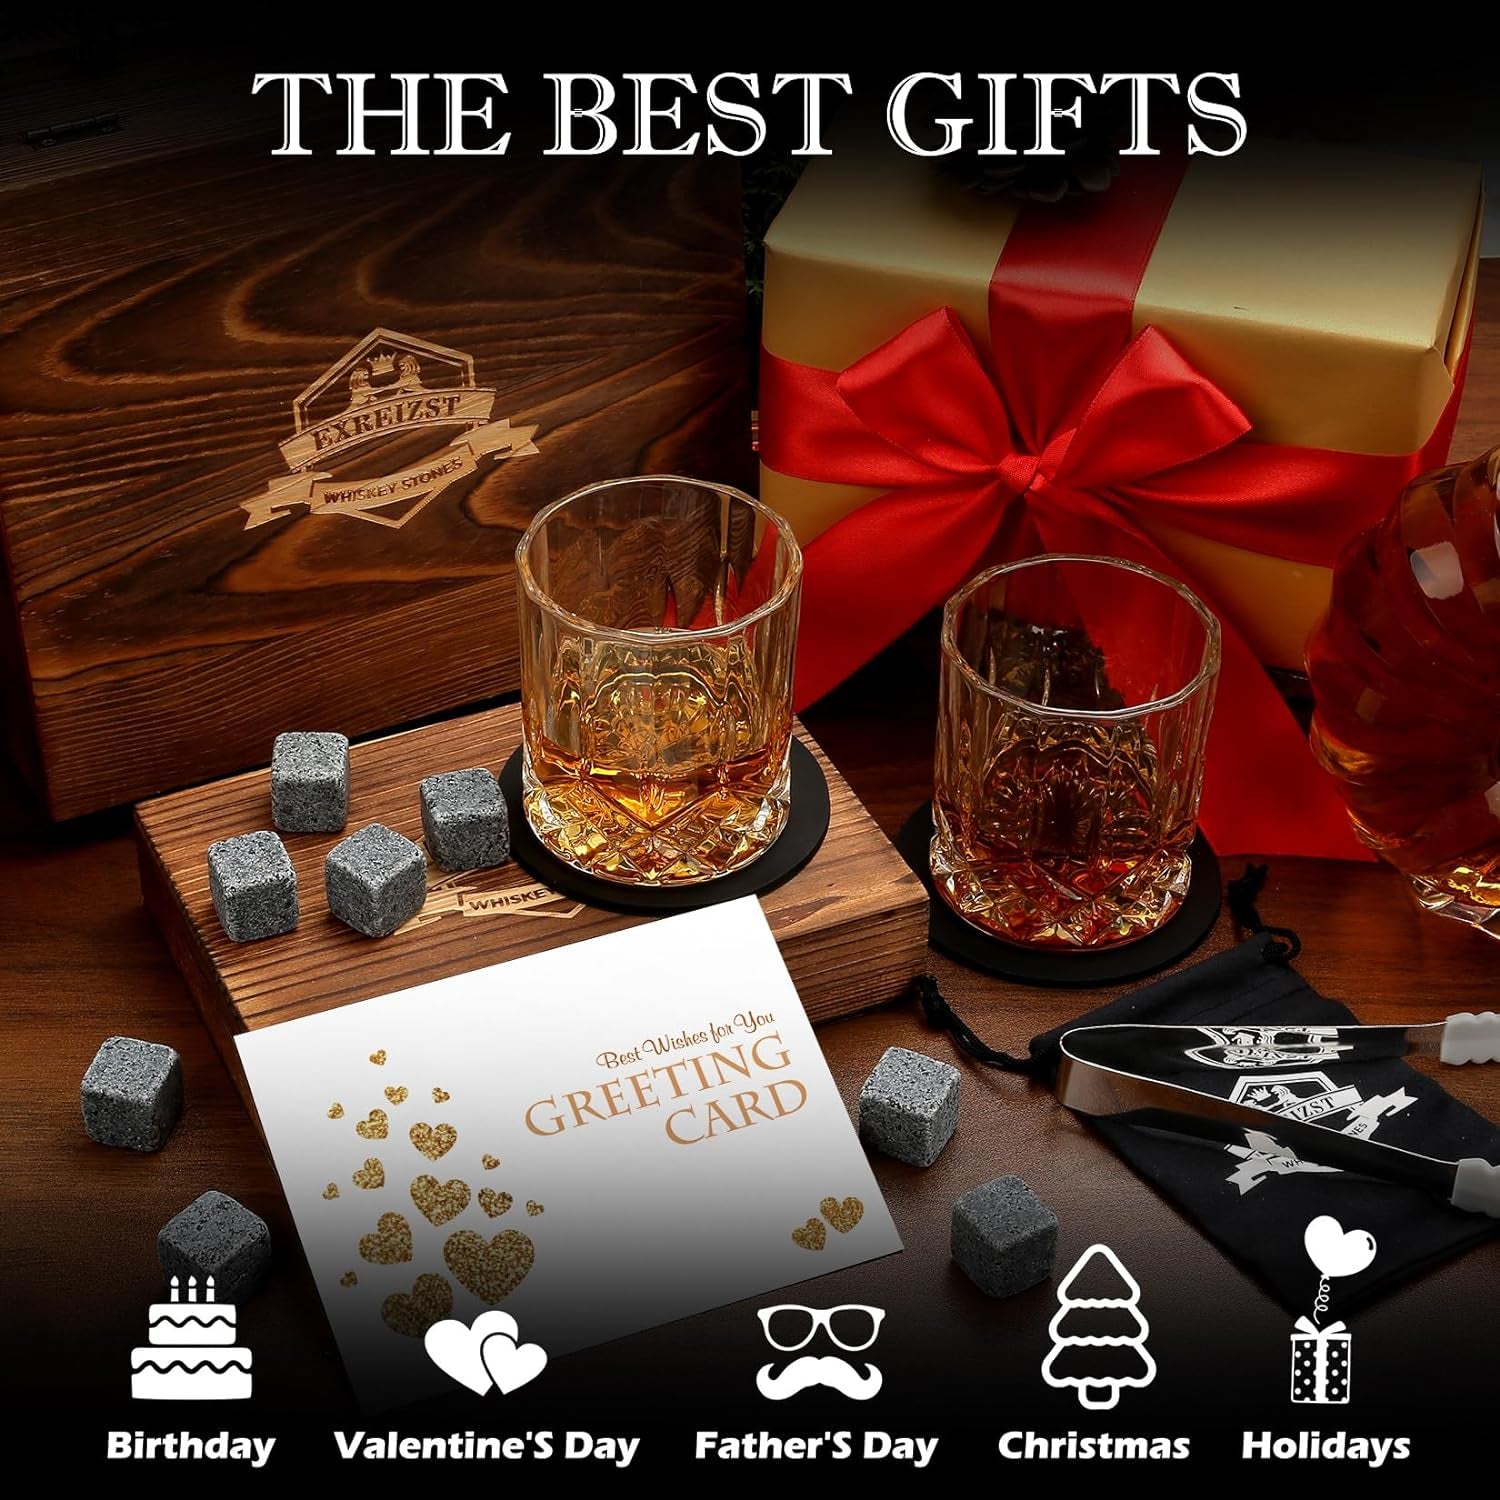 Whiskey Stones Gift Set - Whiskey Glass Set of 2 - Granite Chilling Whiskey Rocks - Scotch Bourbon Box Set - Best Drinking Gifts for Men Dad Husband Birthday Party Holiday Present